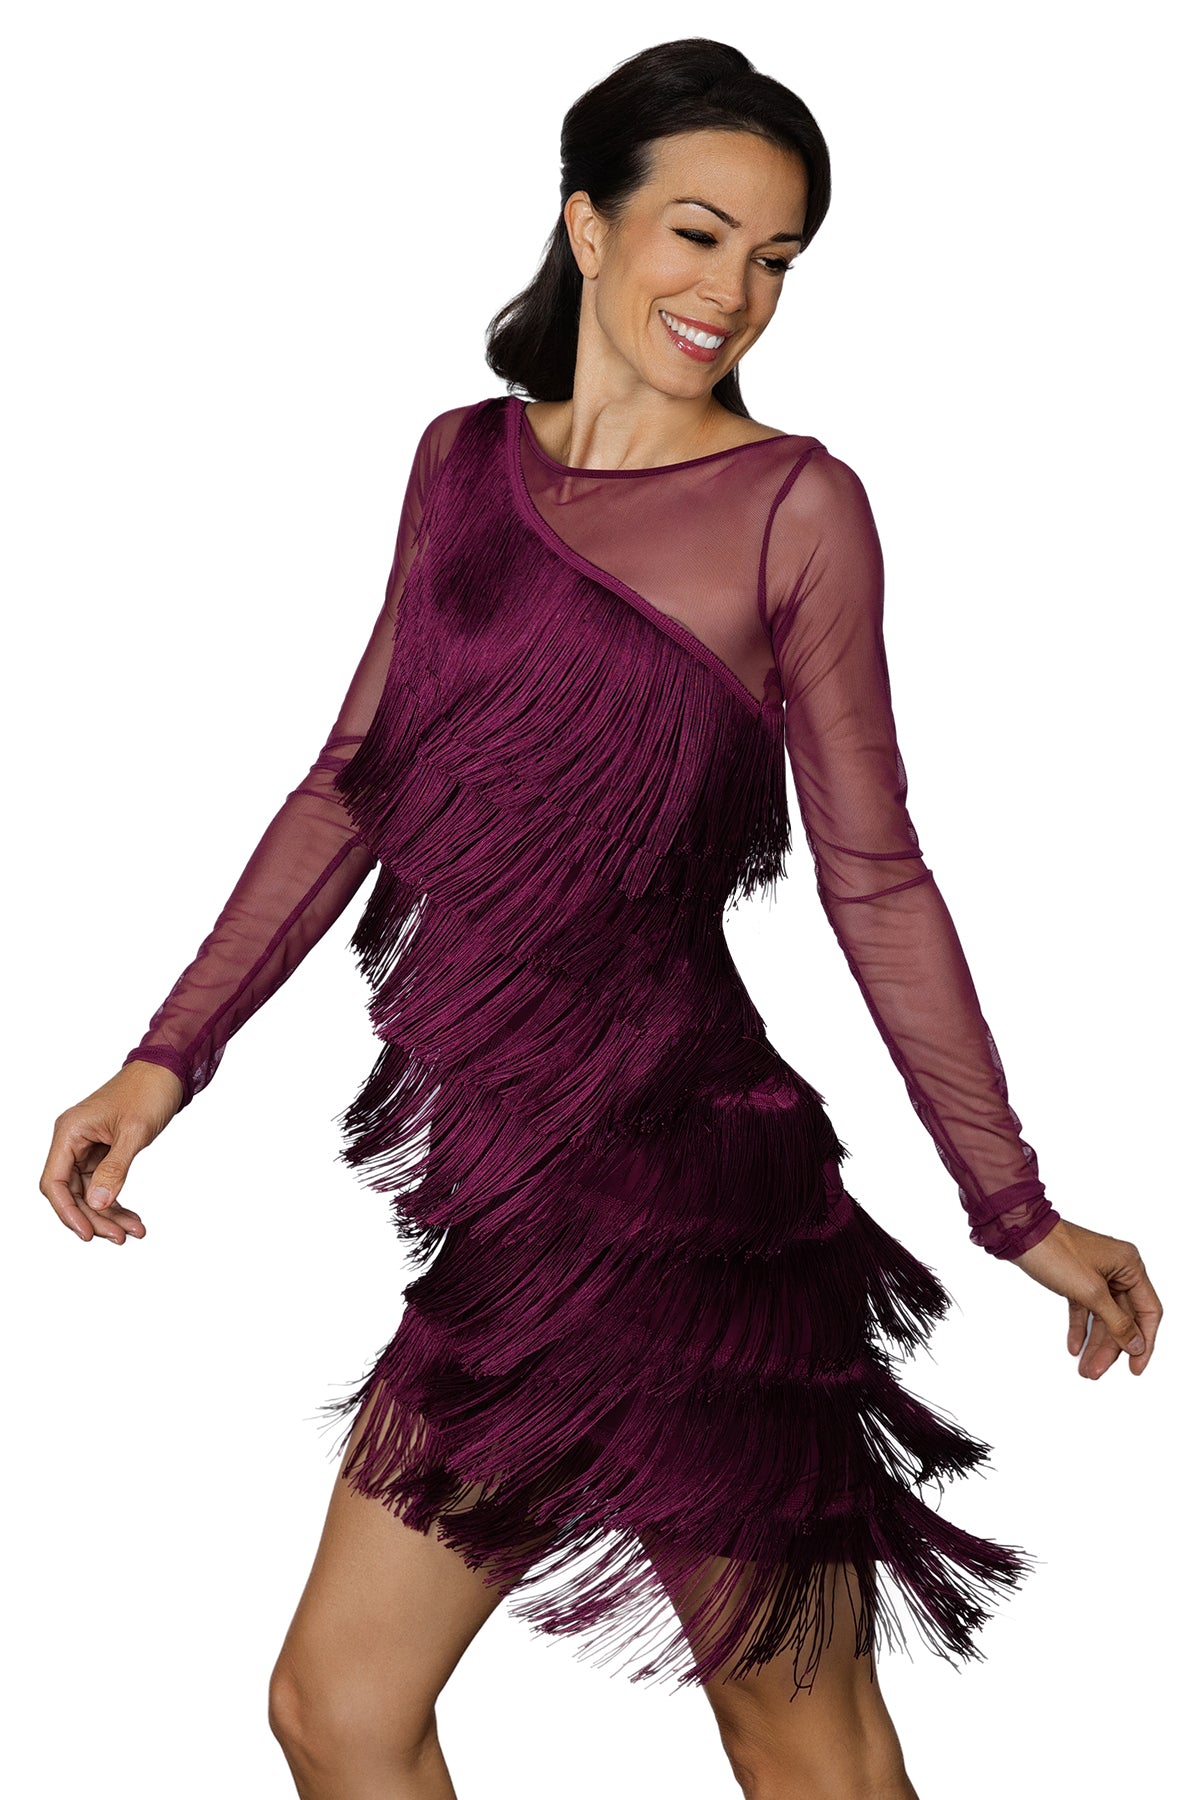 Women's wine colored Latin dance dress with fringe